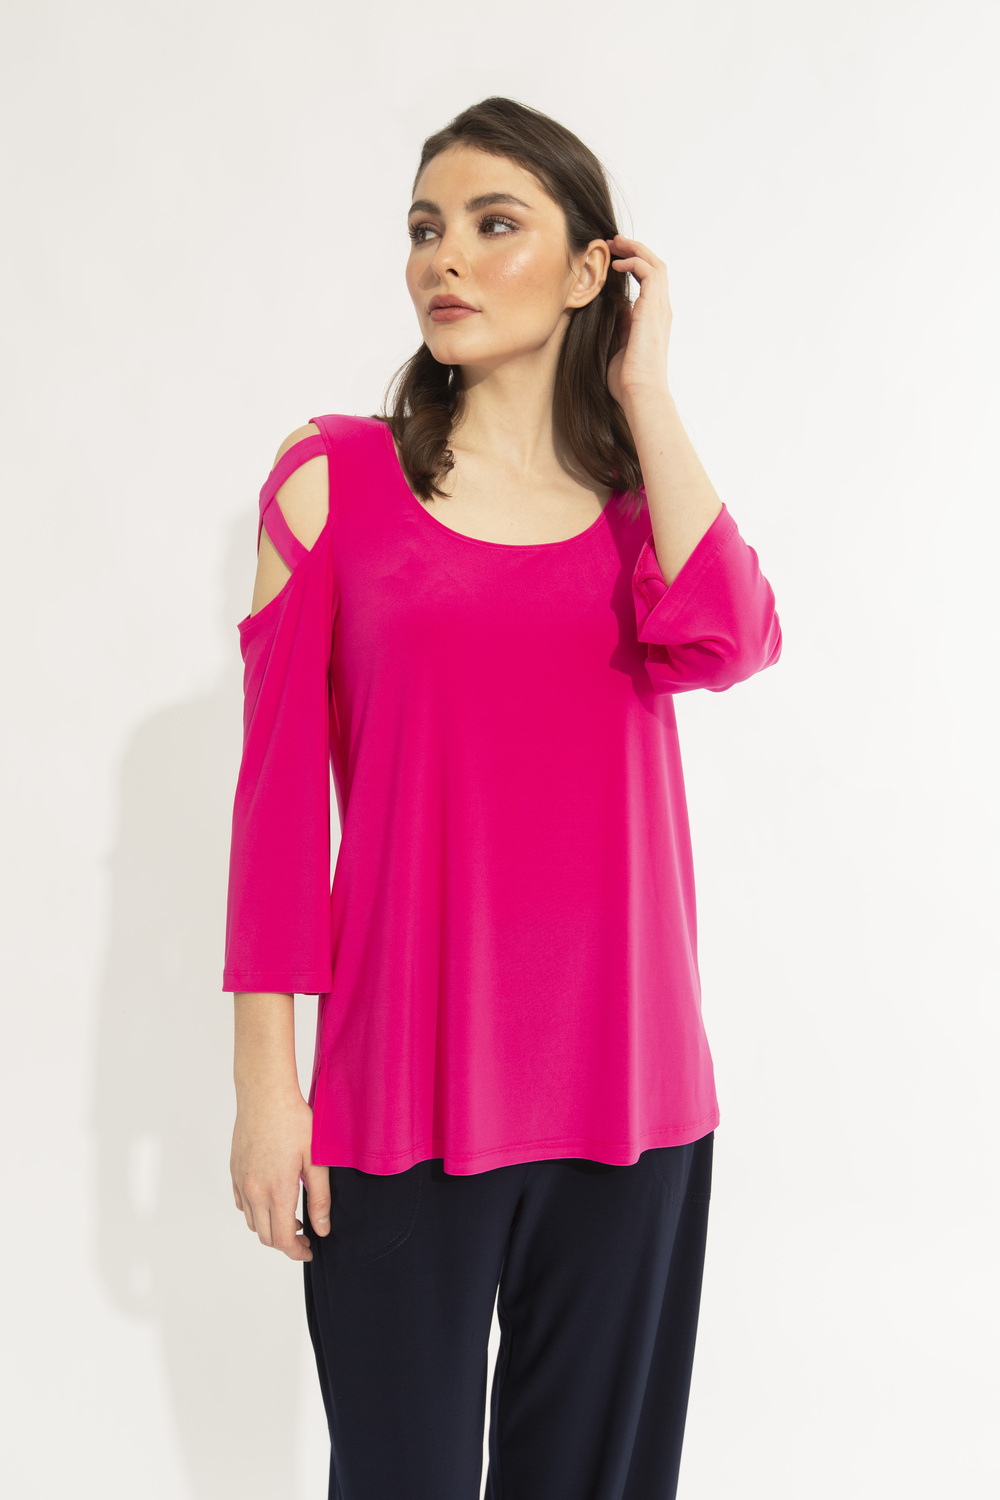 Cut-Out Shoulder Top Style 231216. Dazzle Pink